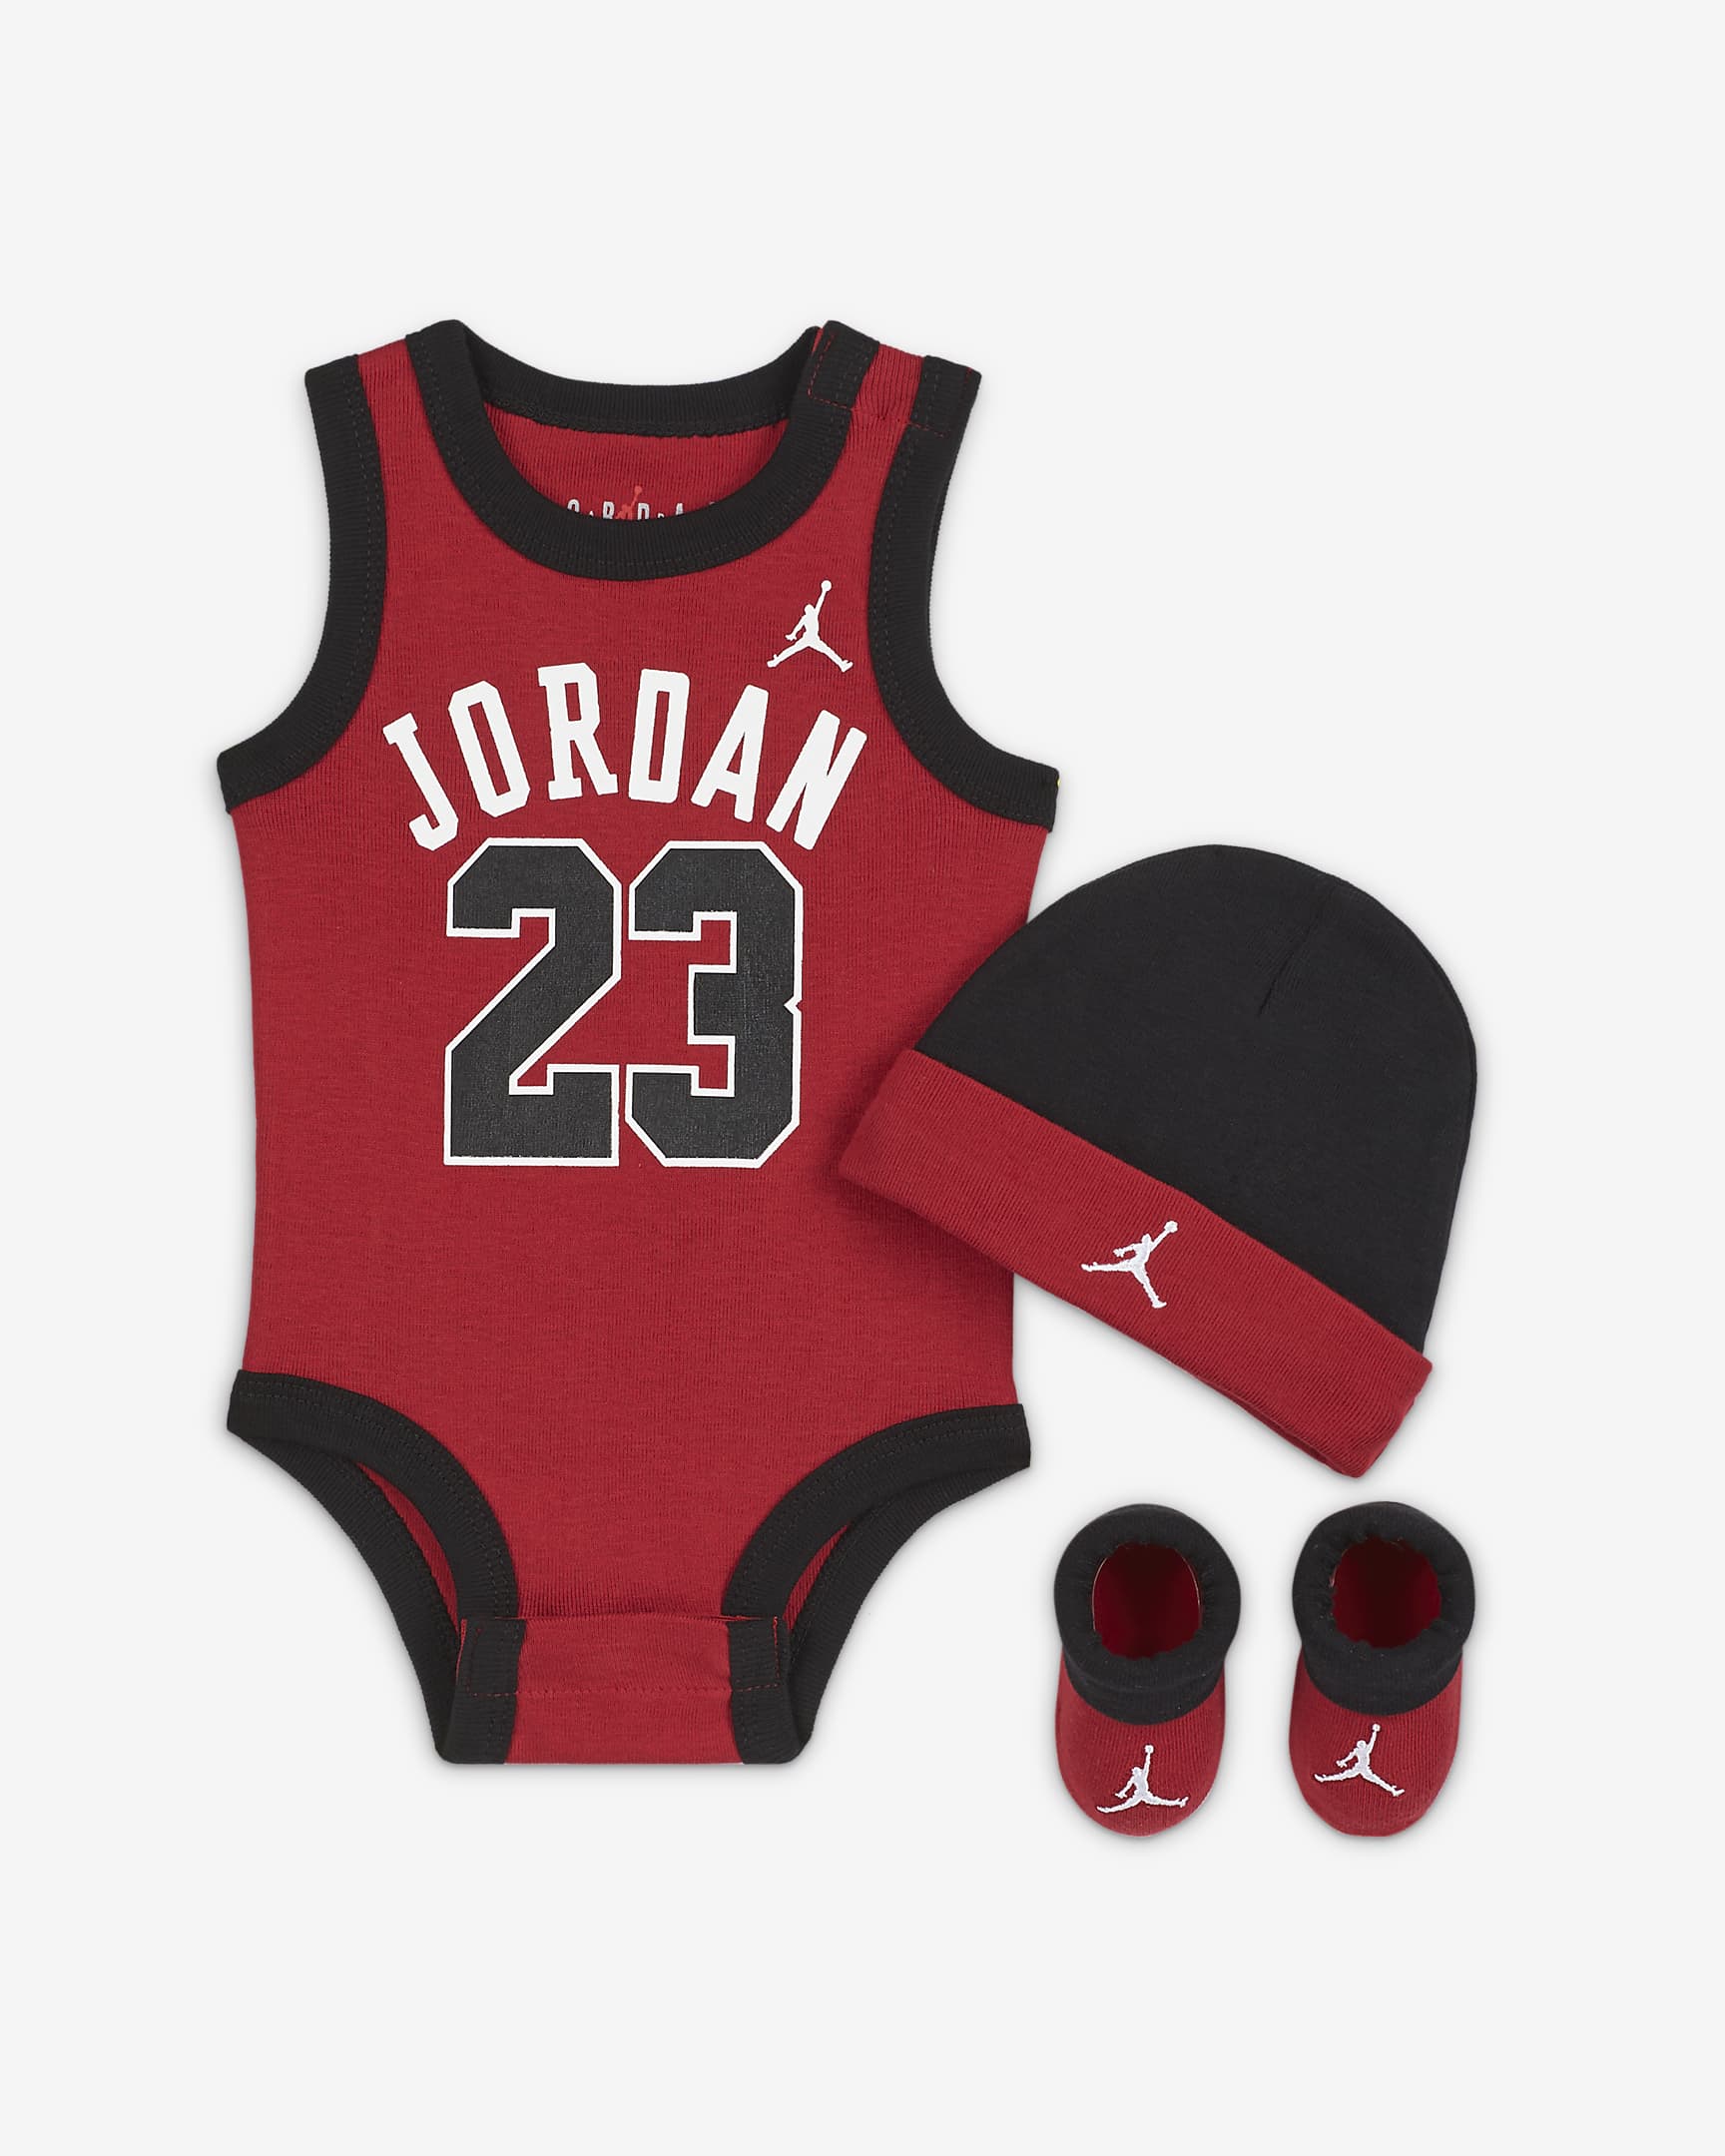 Jordan Baby Box 